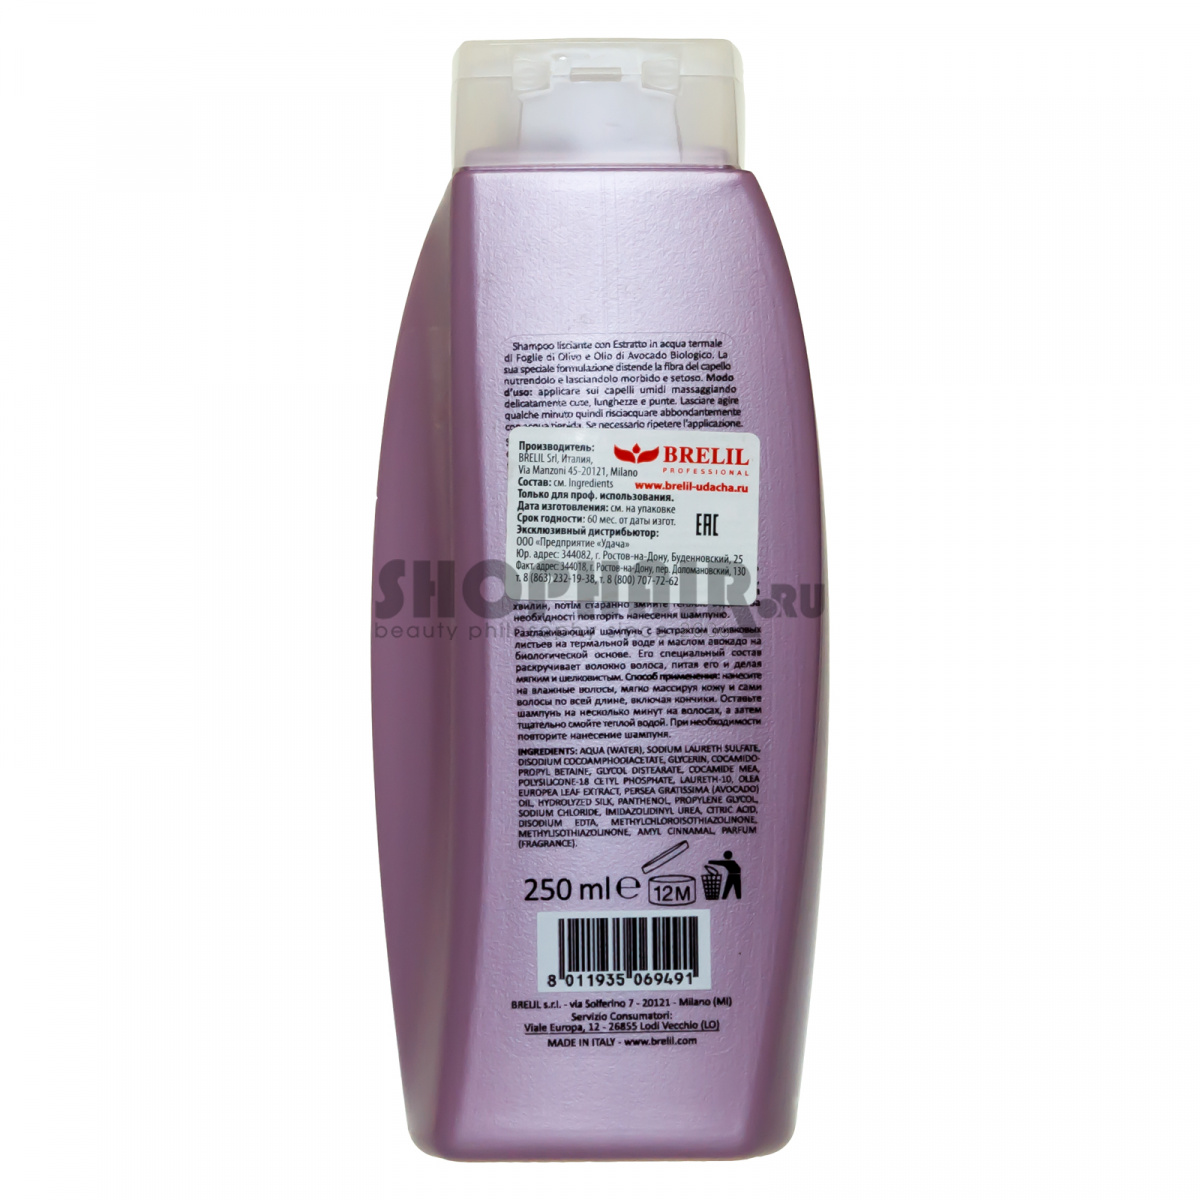 Brelil Bio Traitement Liss Shampoo – Разглаживающий шампунь 250 мл Brelil Professional (Италия) купить по цене 1 220 руб.